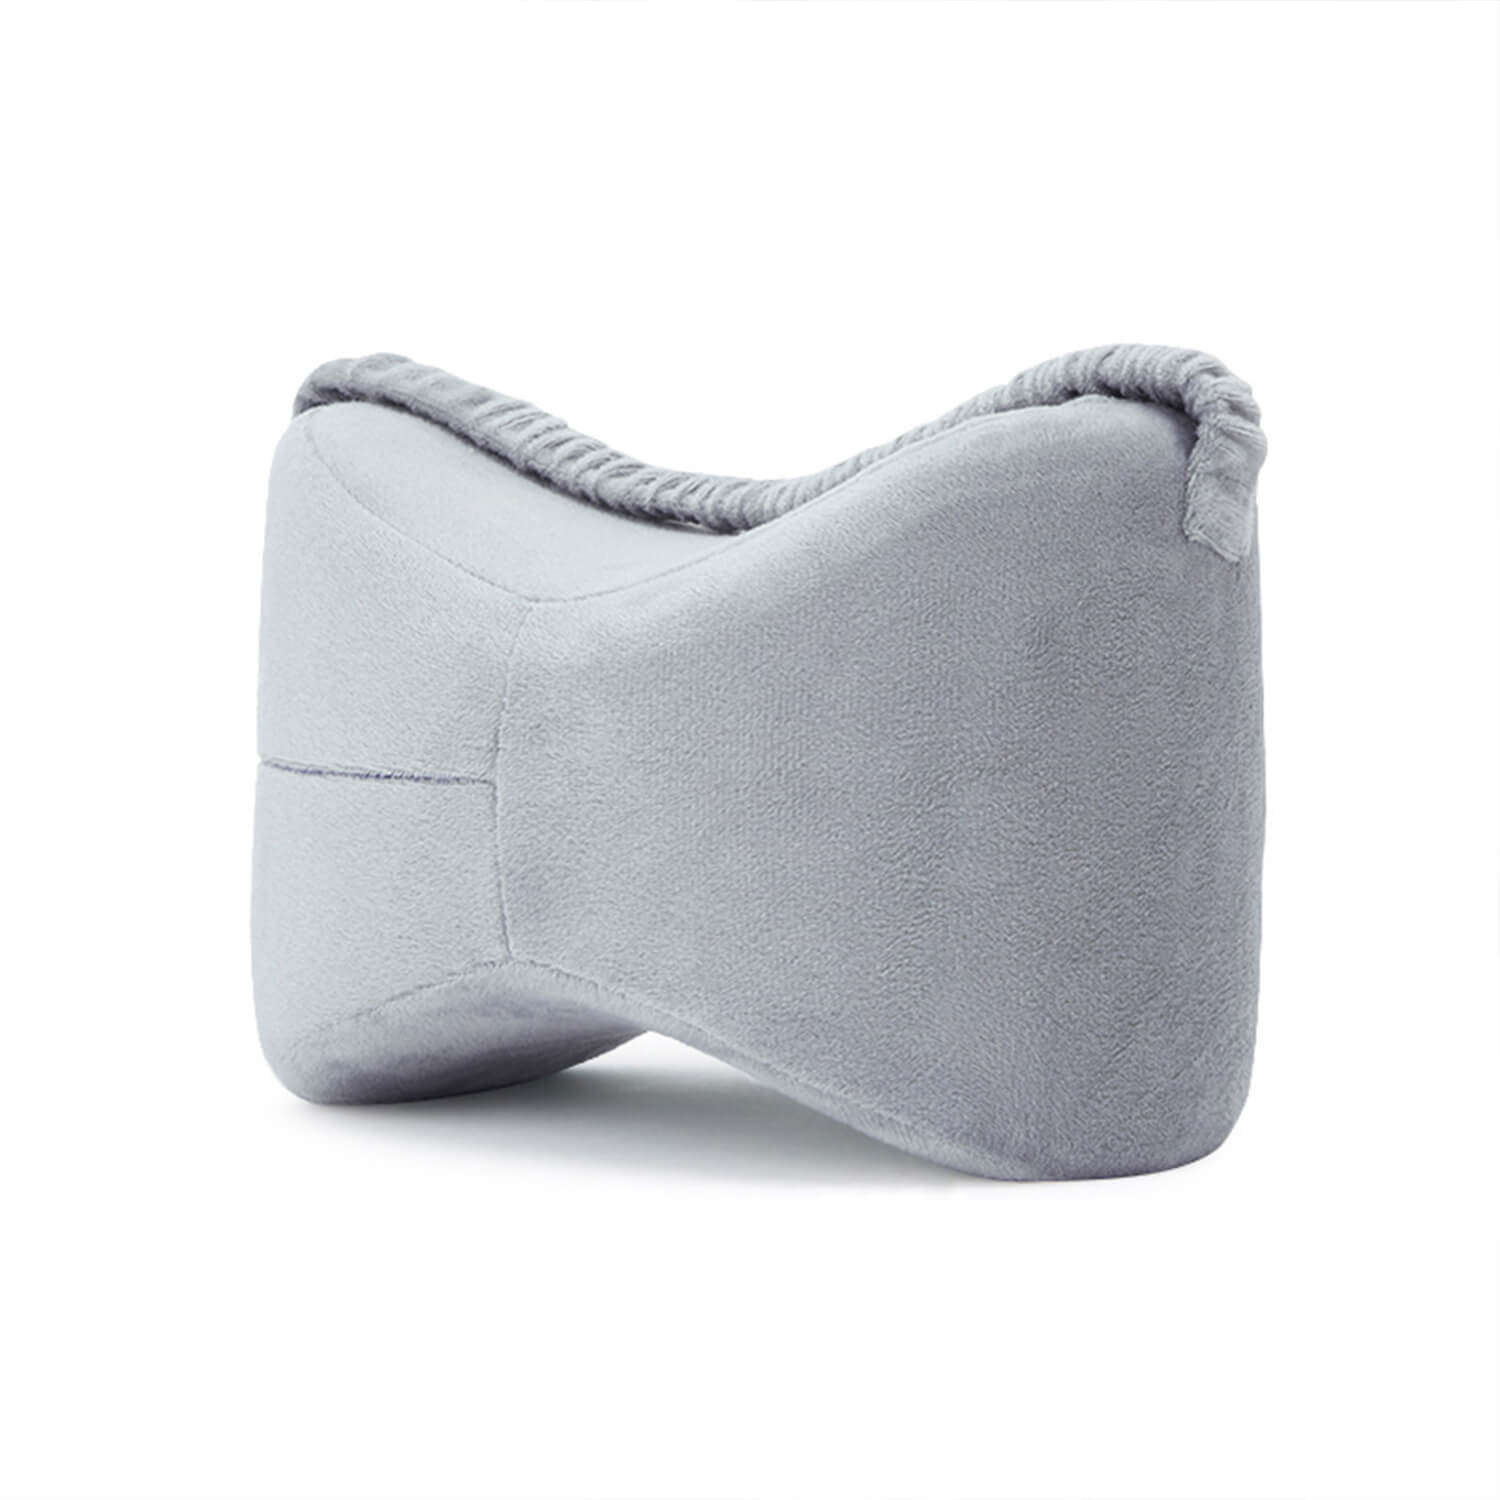  Everlasting Comfort Knee Wedge Pillow for Side